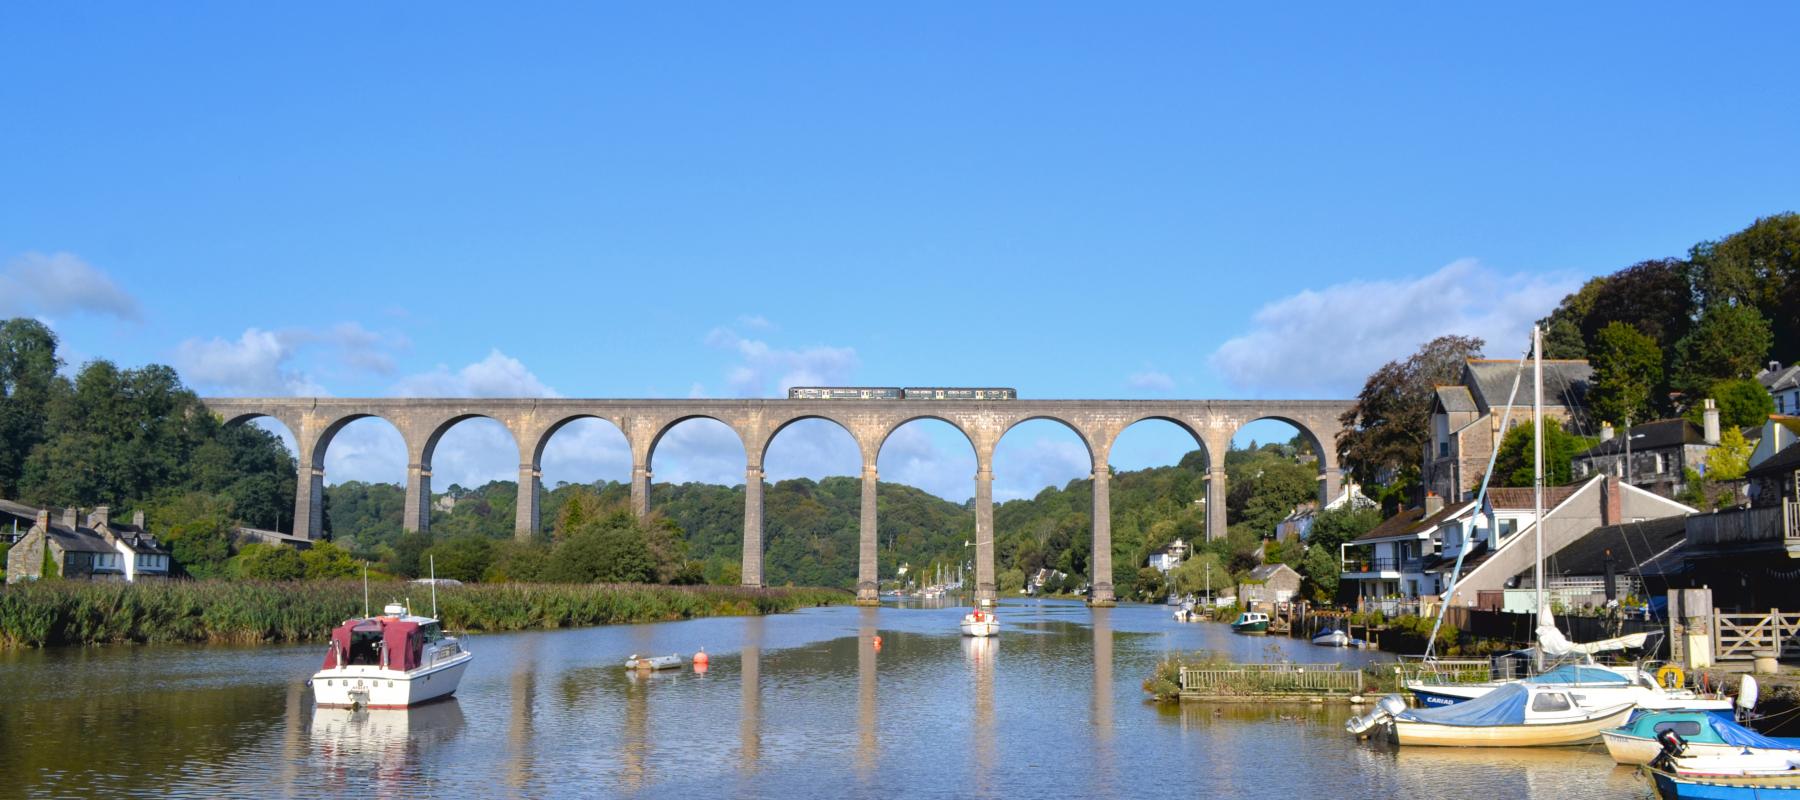 Calstock Viaduct along the Tamar Valley line. Photo: Devon & Cornwall Rail Partnership